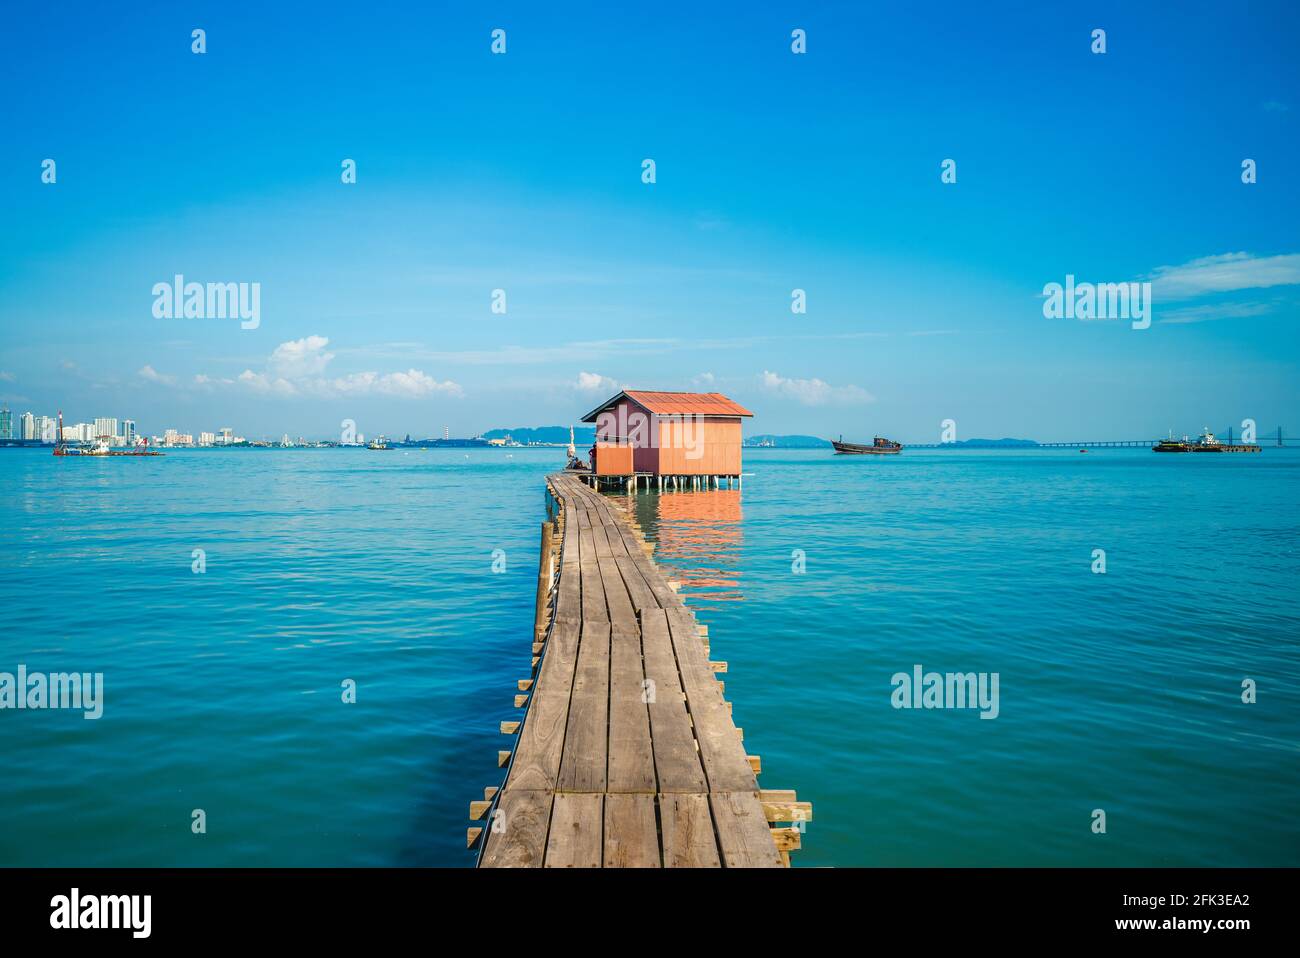 tan jetty, uno dei moli clan a george city, penang, malesia Foto Stock